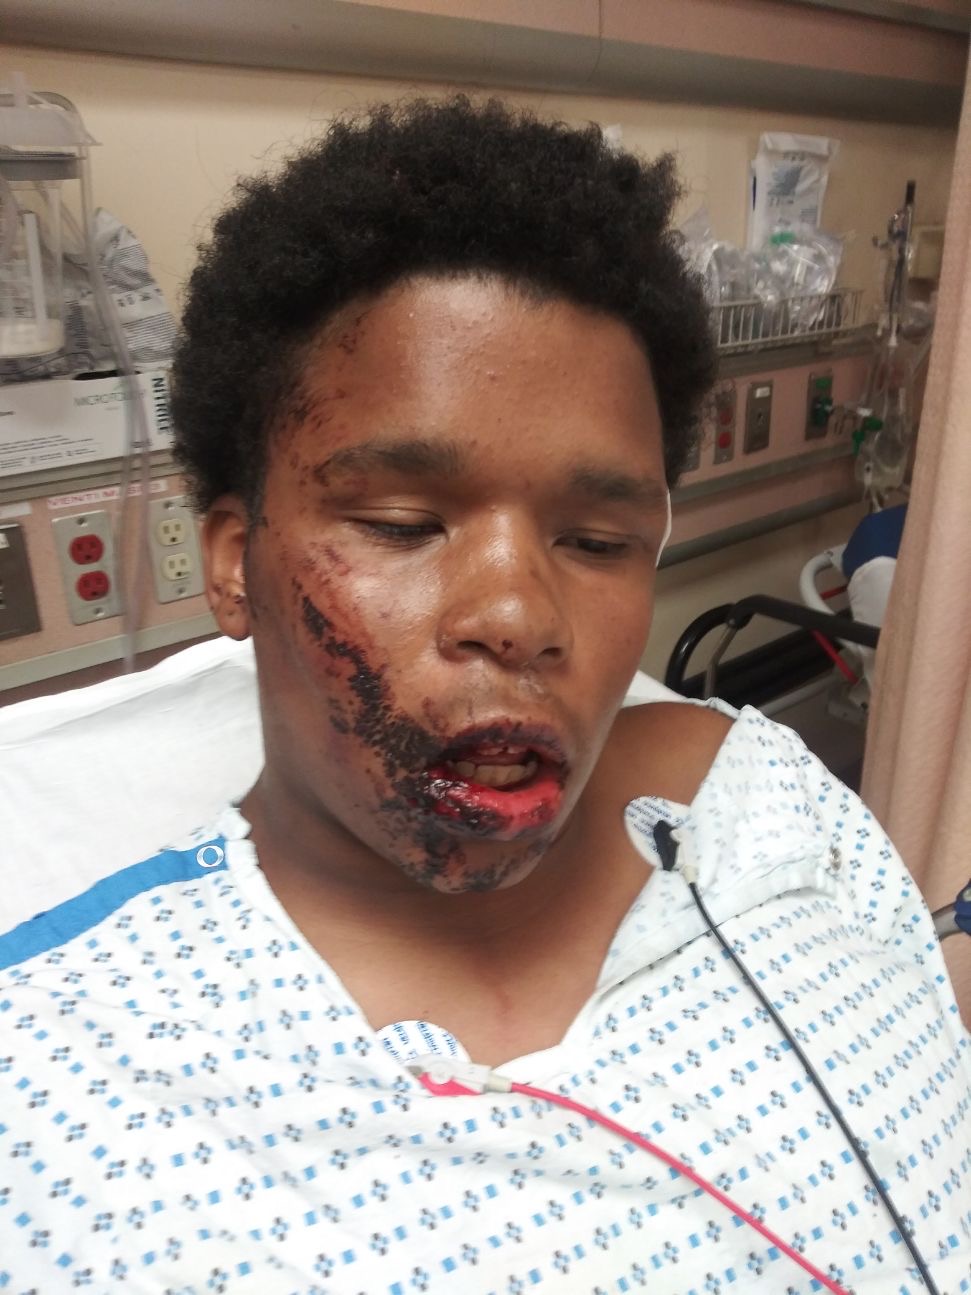 Bronx boy, 16, says NYPD brutalized him, made him walk 